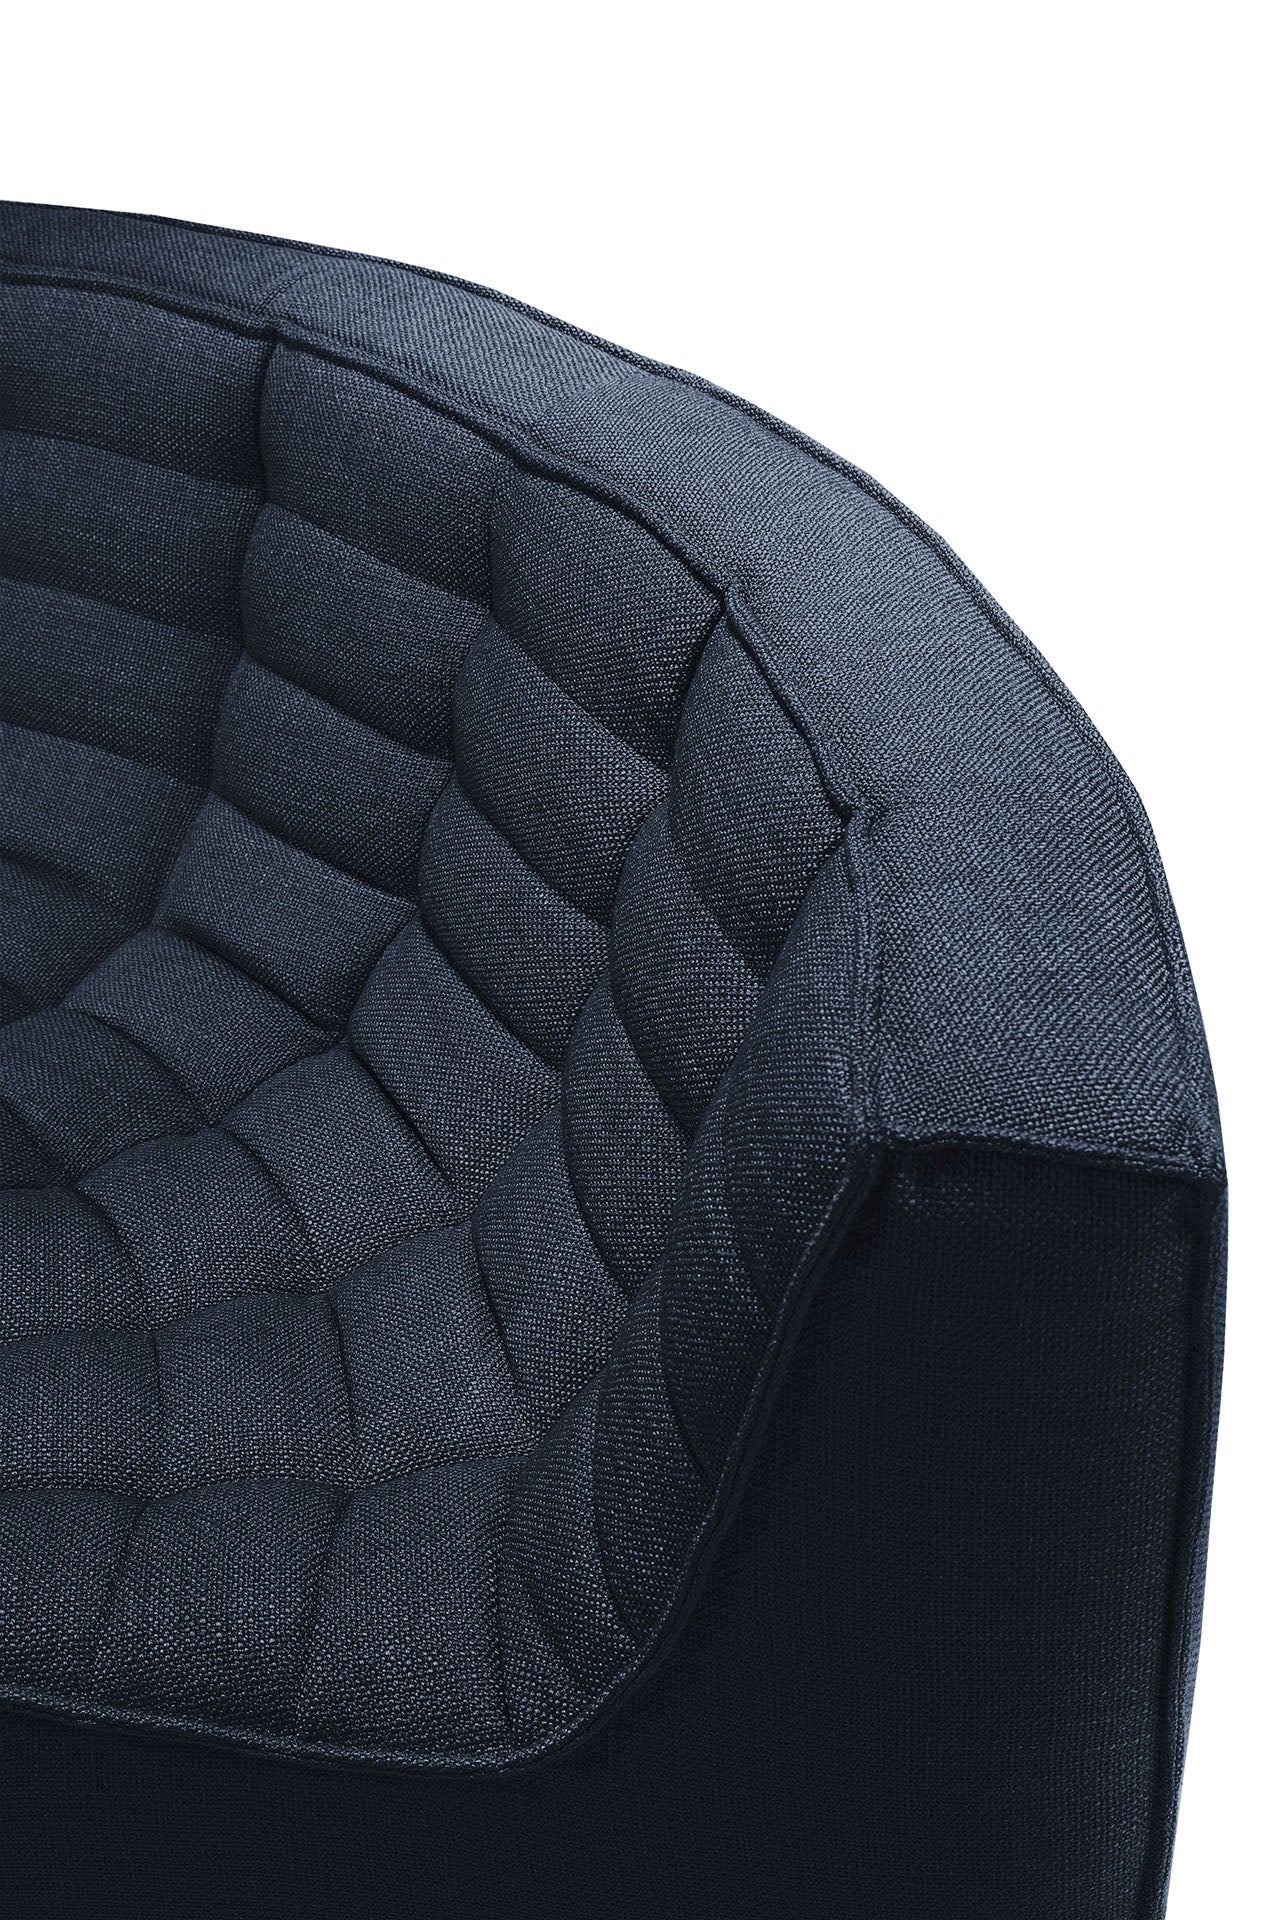 N701 Round Corner Eco Fabric Sofa, Graphite